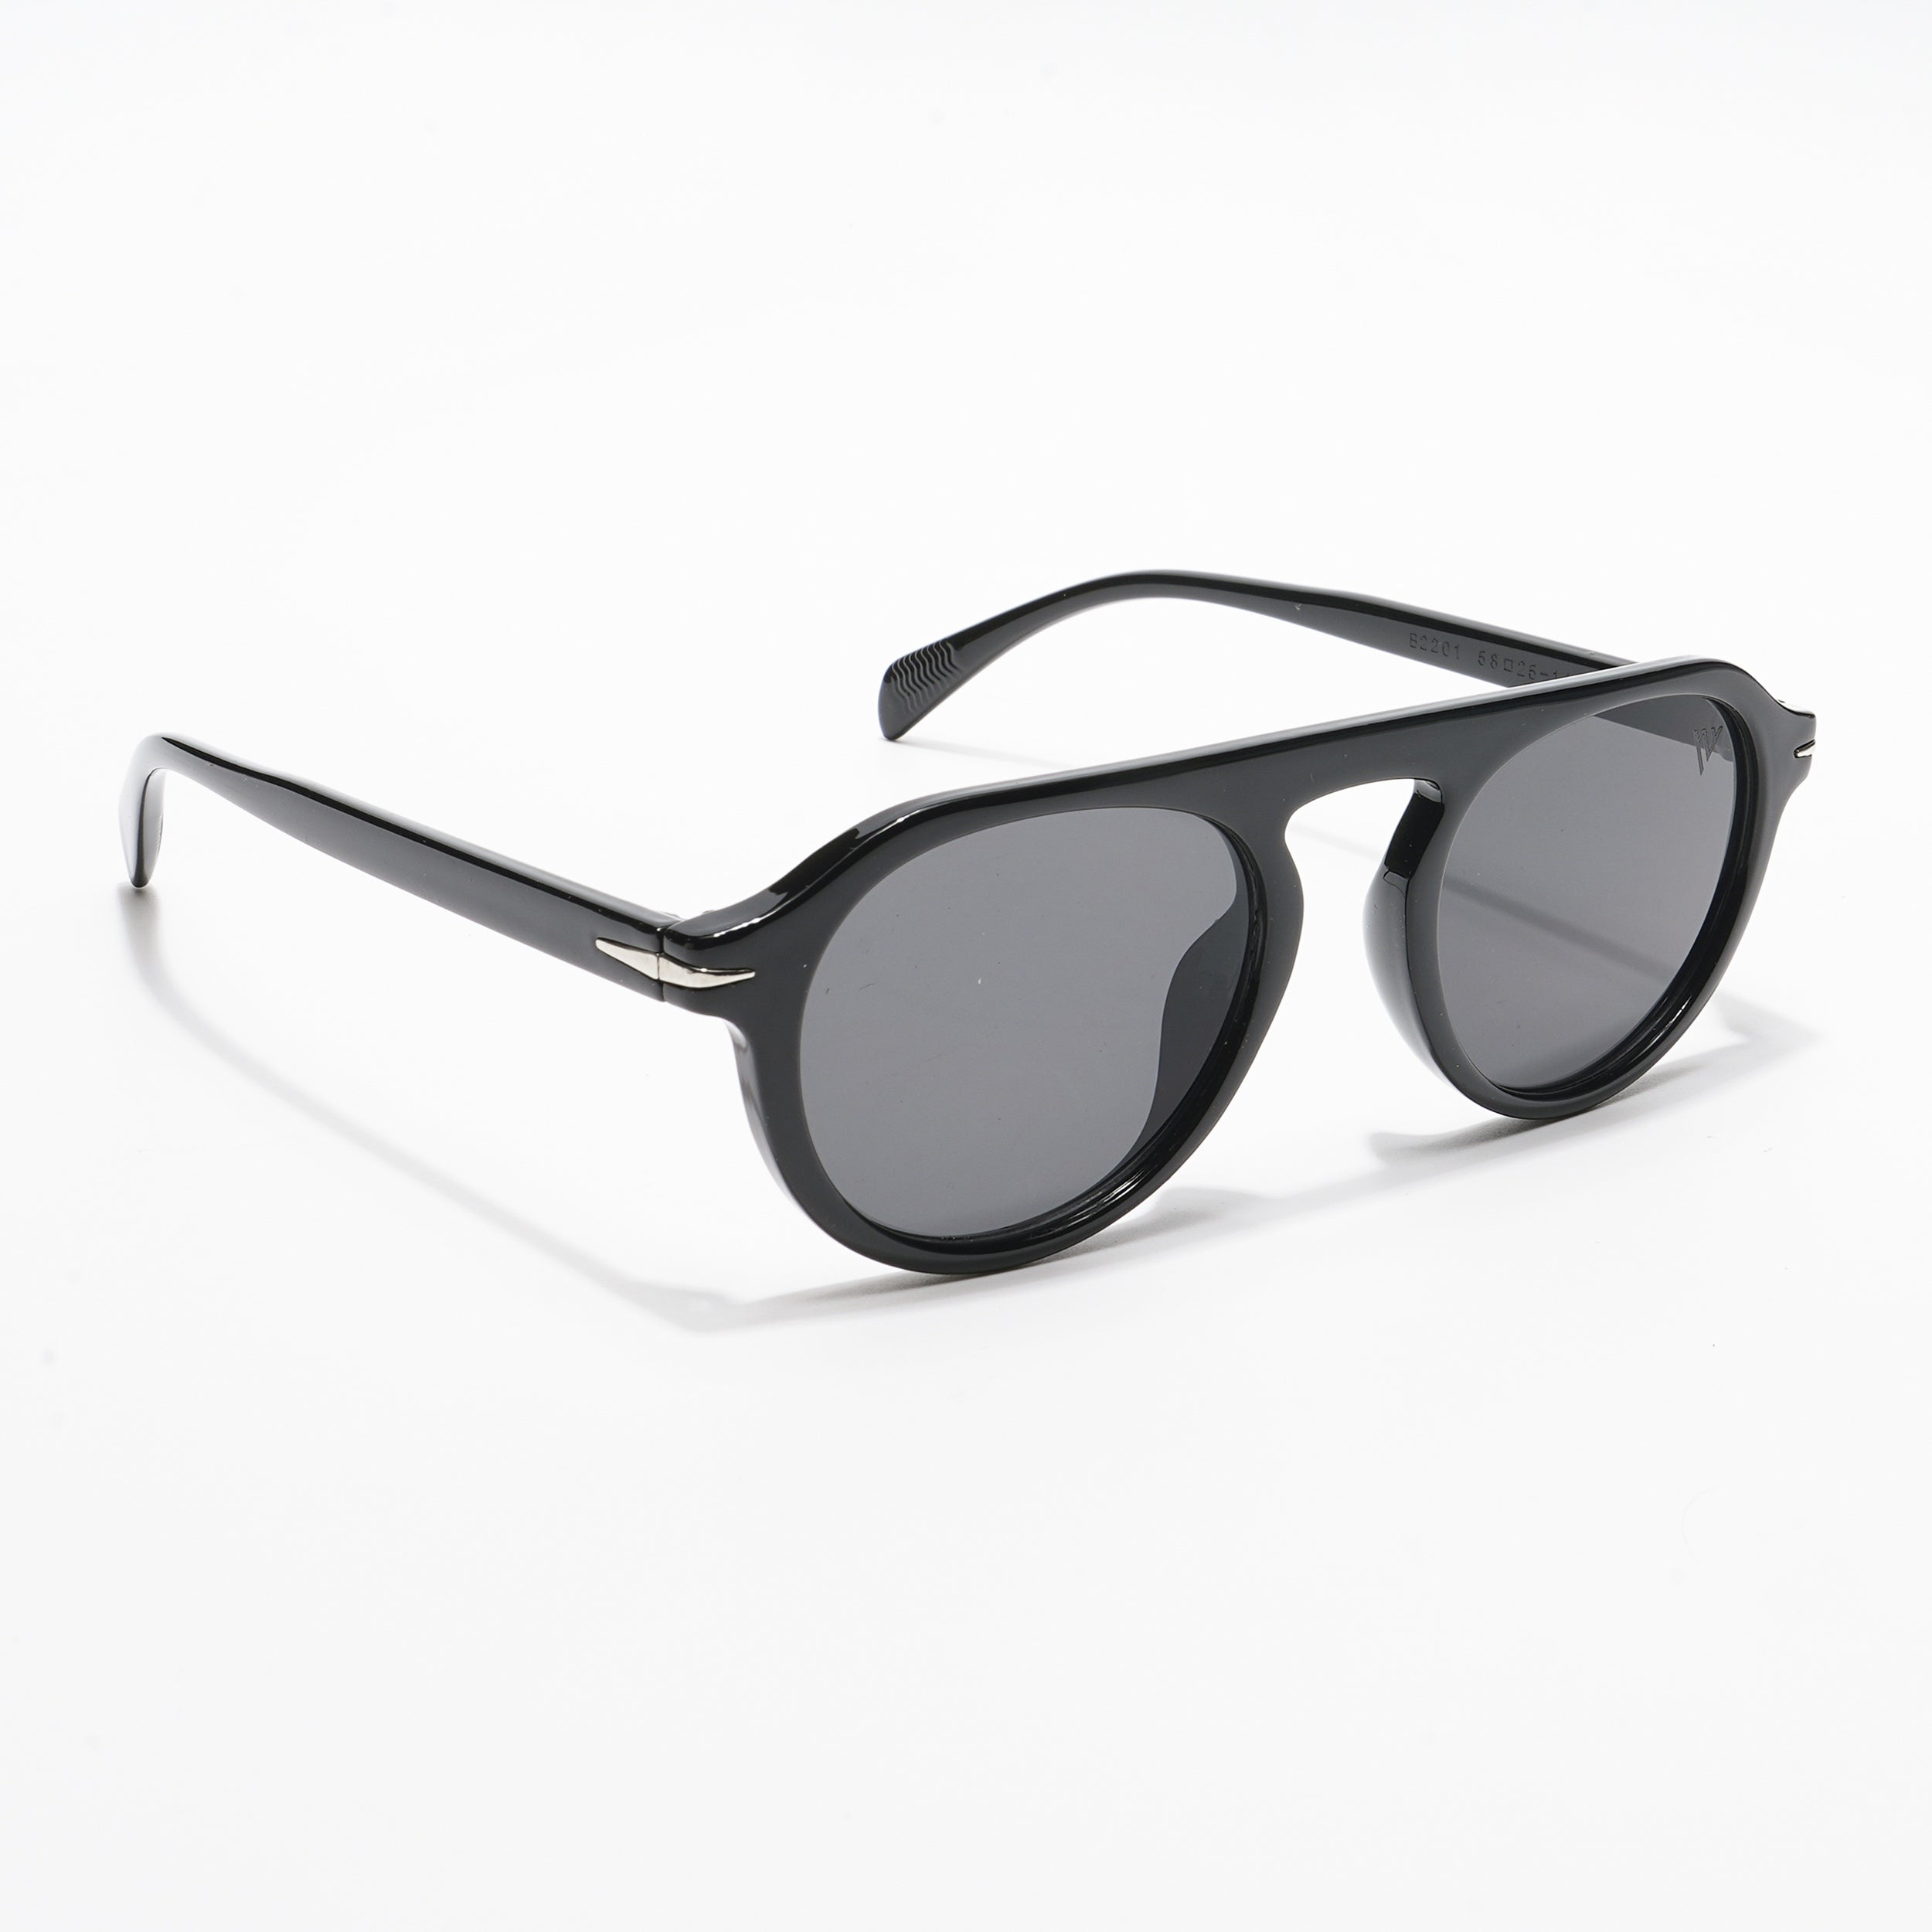 Voyage Black Round Sunglasses - MG3893